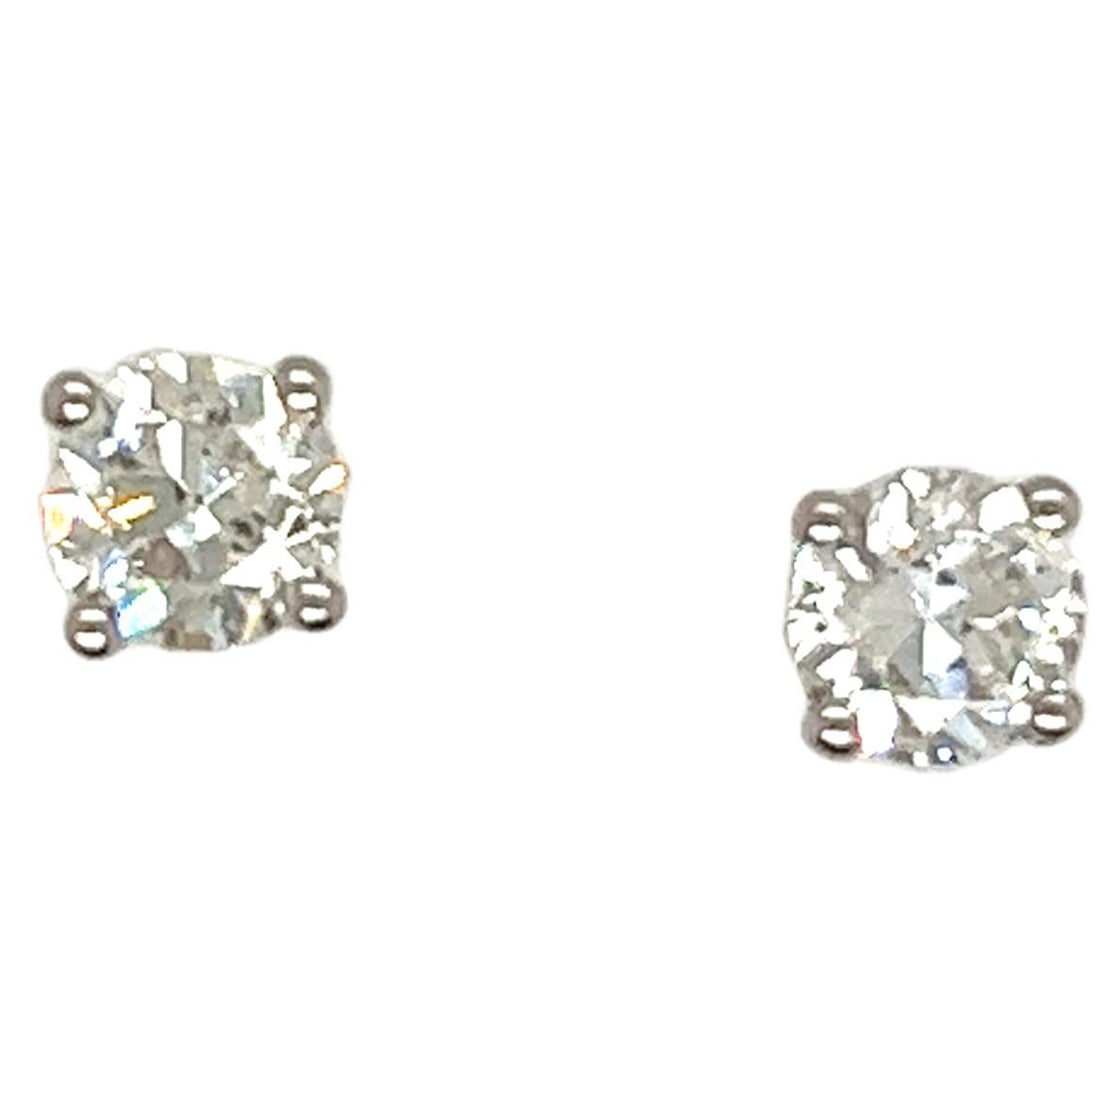 18ct White Gold Diamond Stud Earrings, 1.23ct Total Diamond Weight